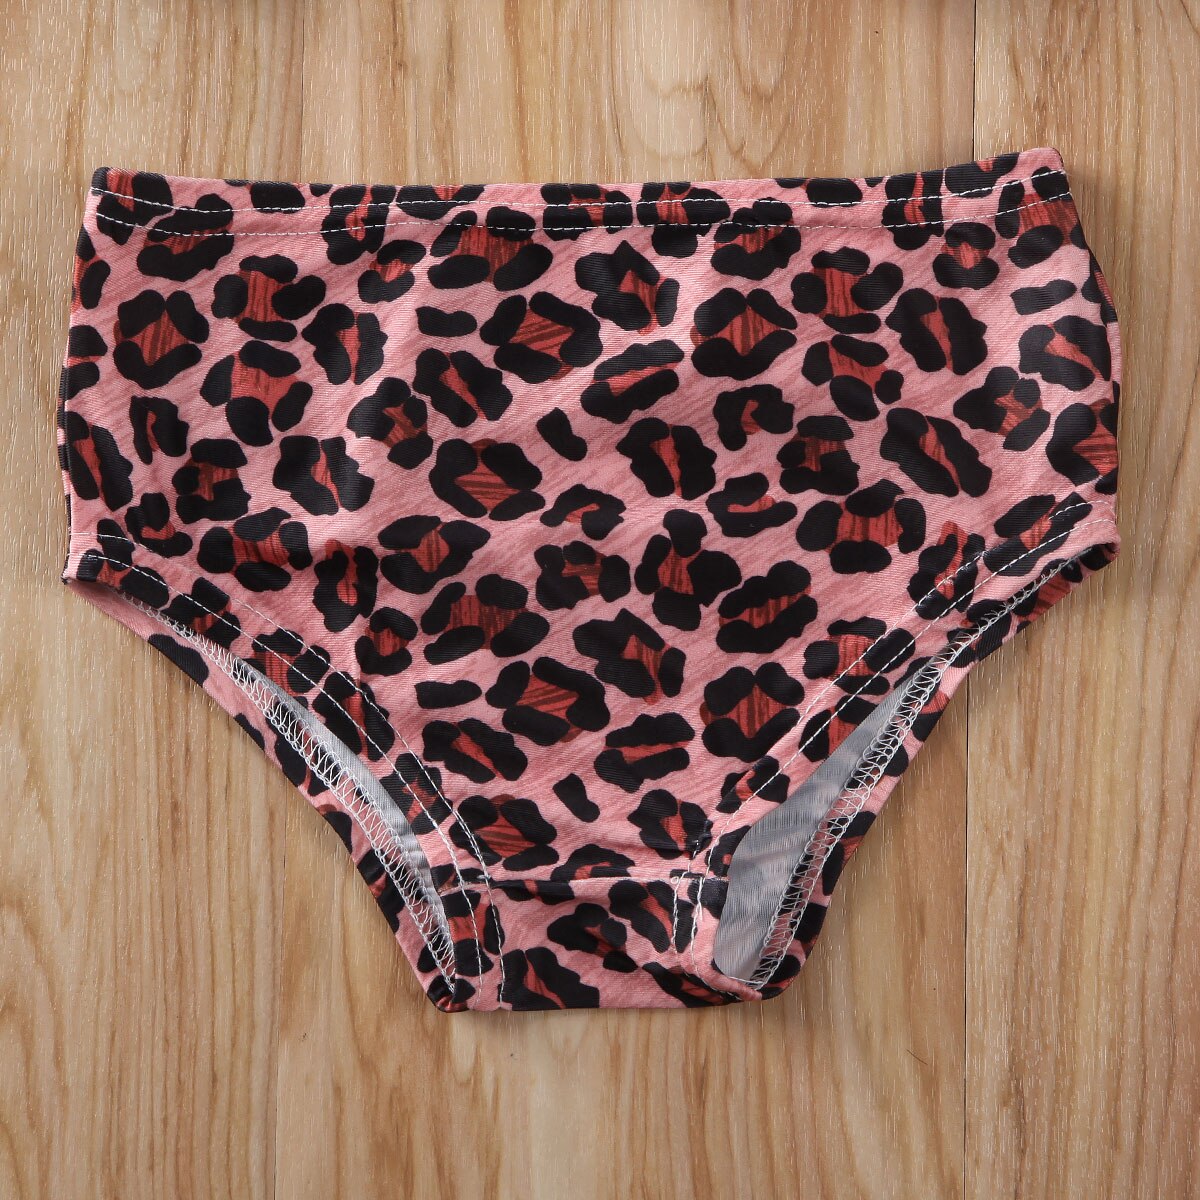 Sommer kid baby pige leopard print bikini 3 stk badetøj badedragt badedragt strandtøj 6m-5t småbørn piger bikini